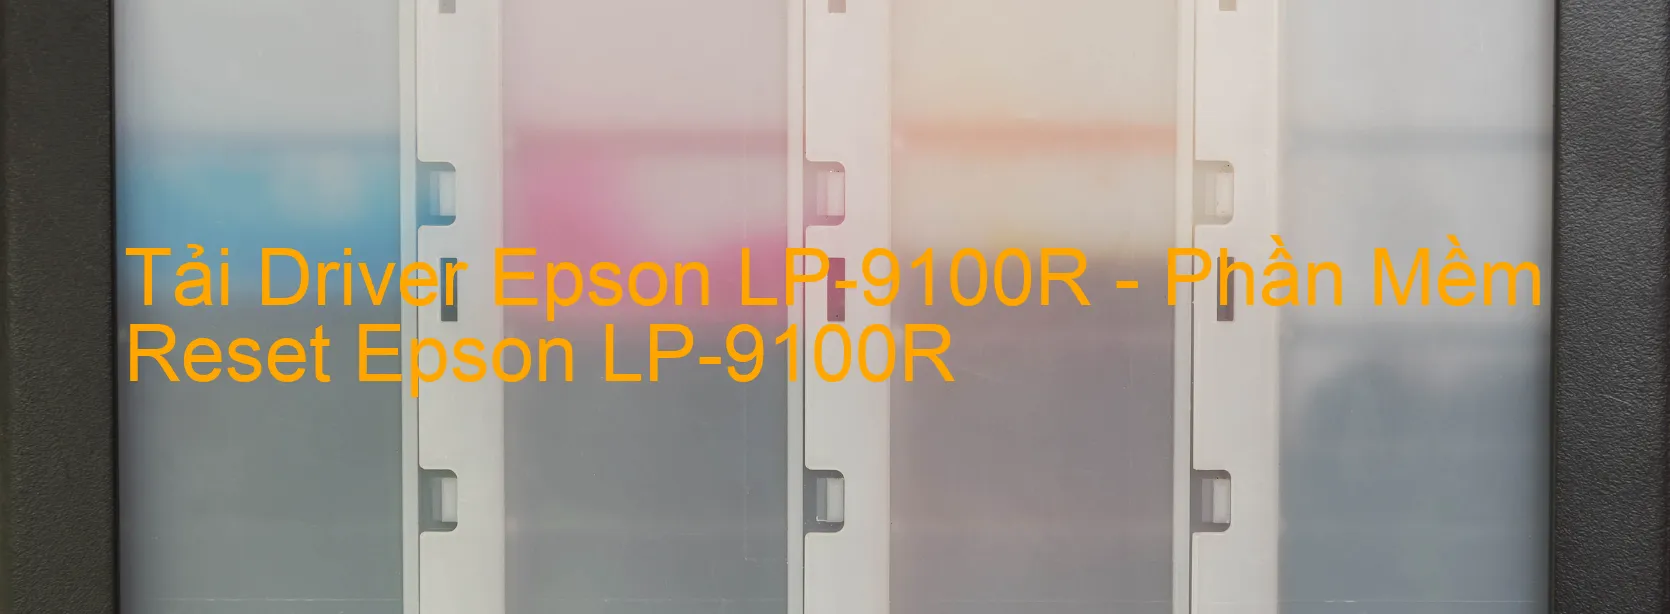 Driver Epson LP-9100R, Phần Mềm Reset Epson LP-9100R